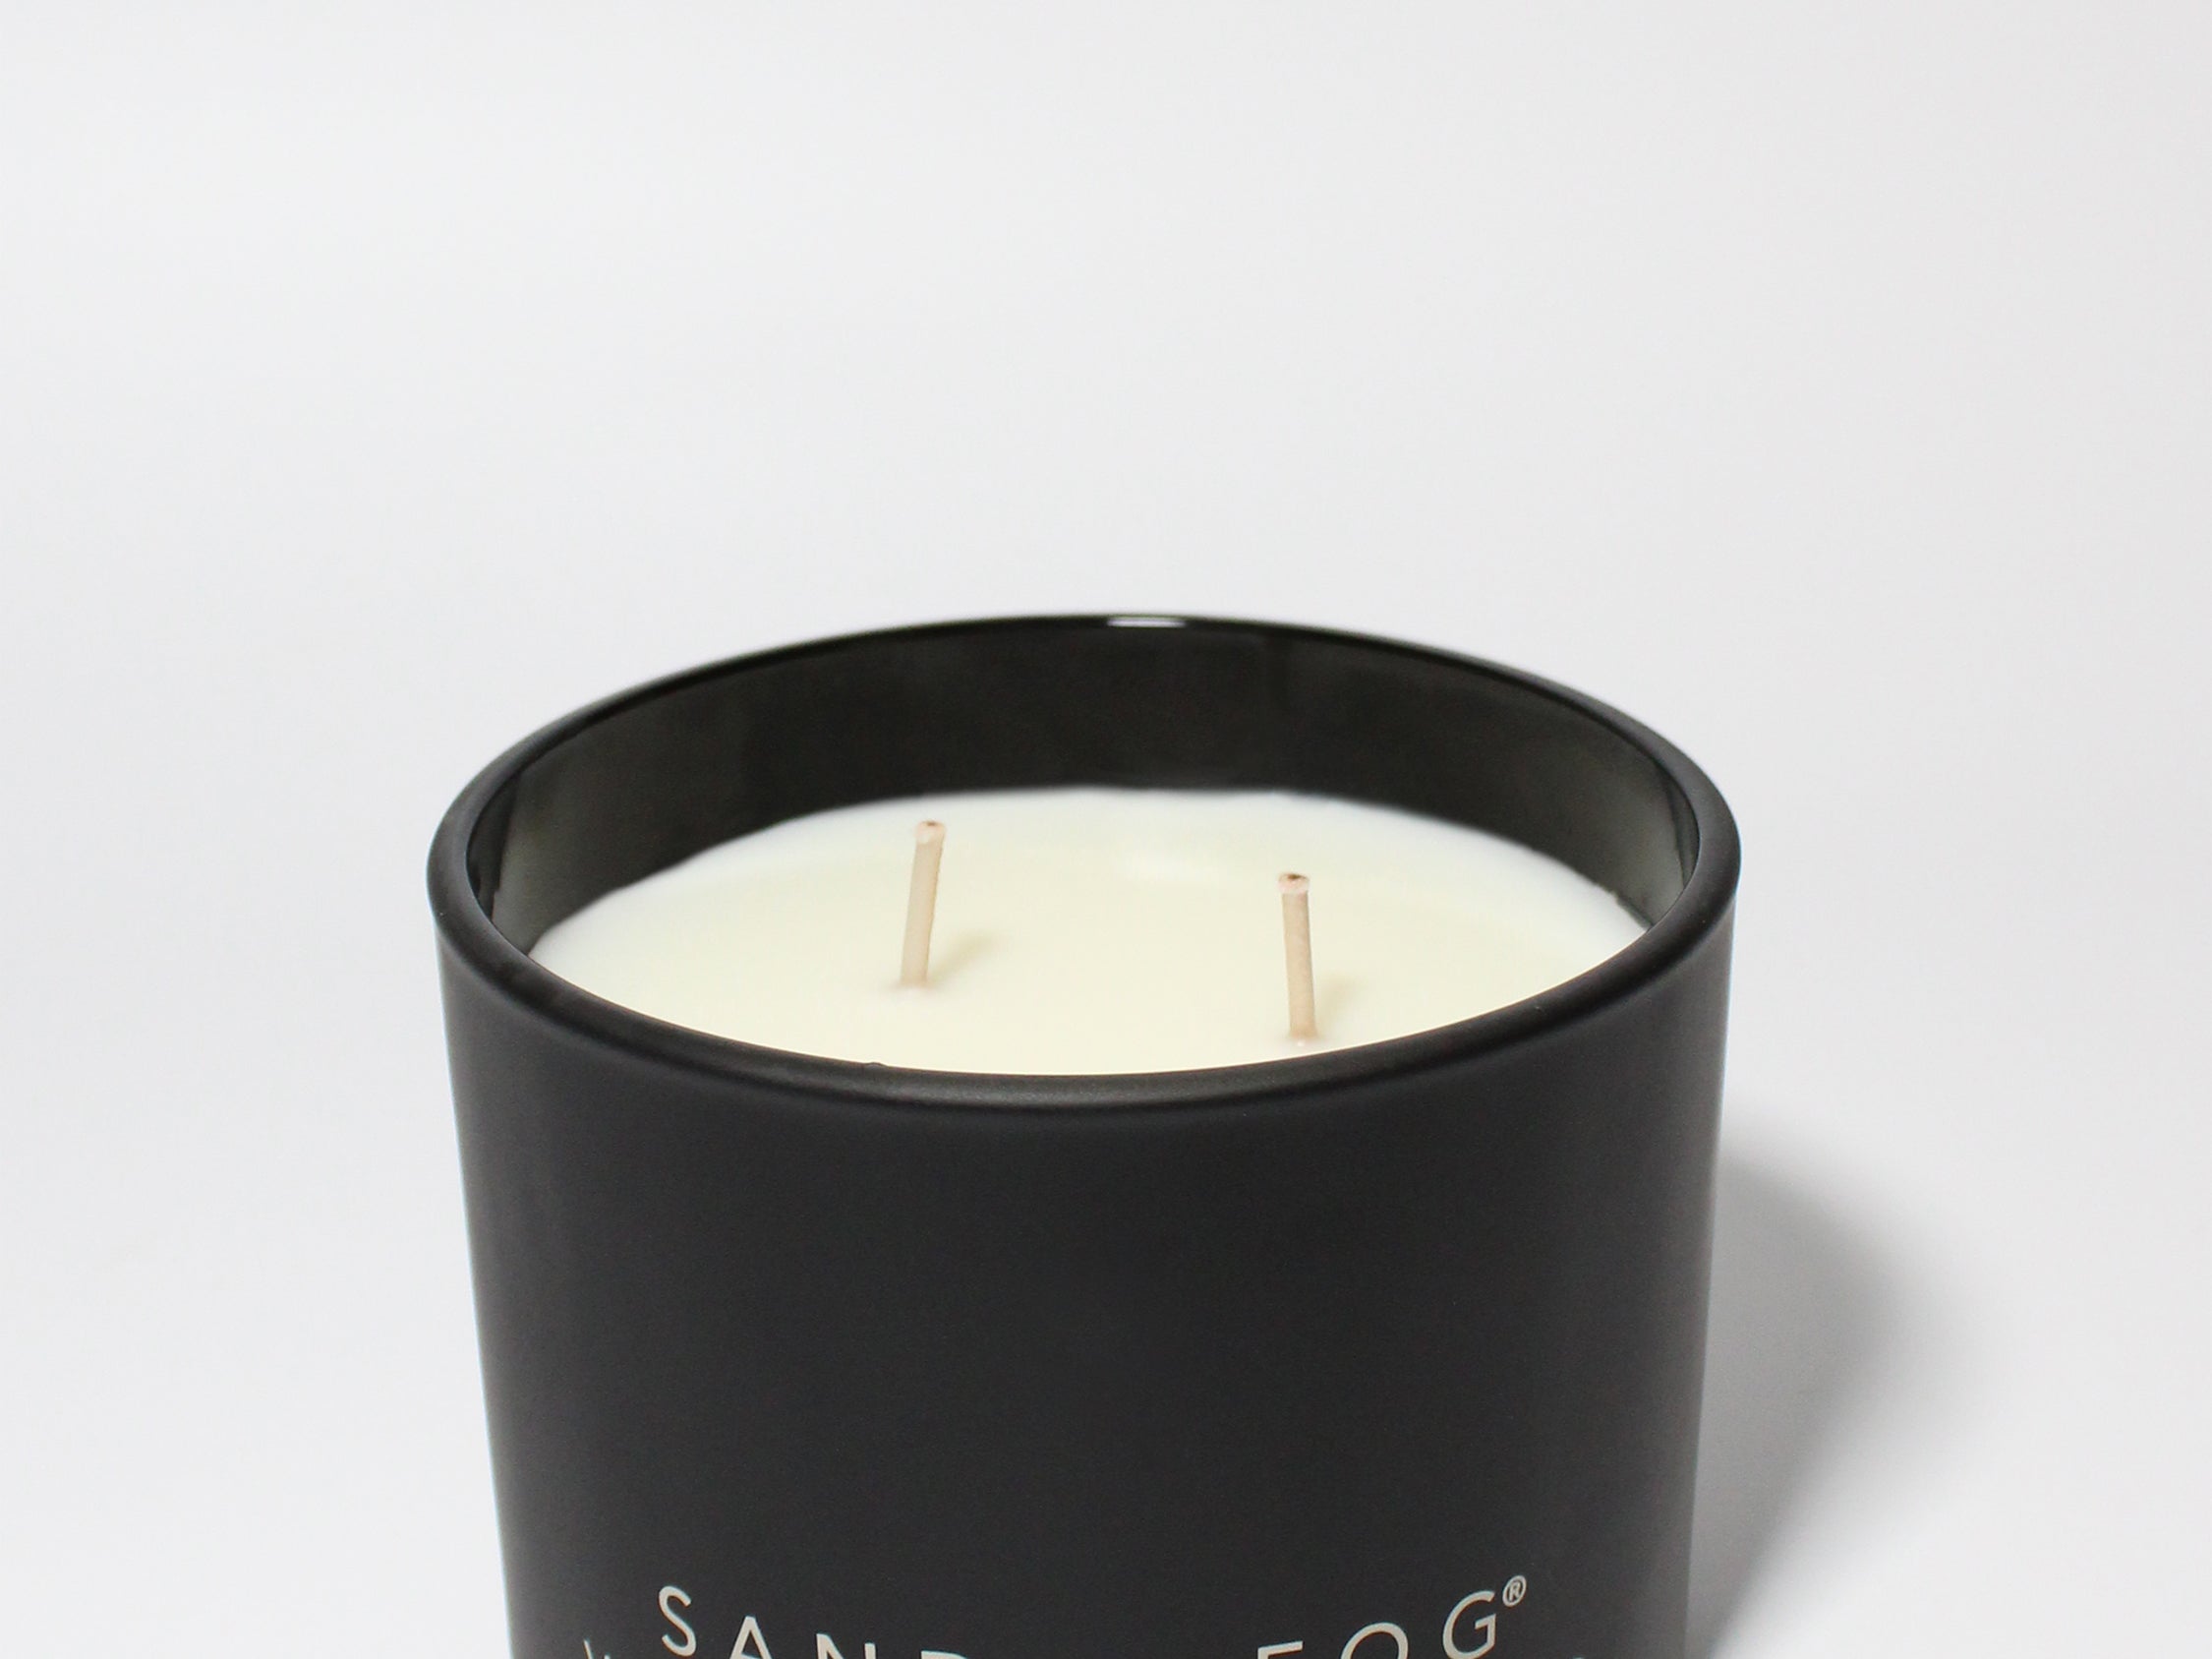 Vanilla Tobacco 12 oz scented candle Black vessel with Landscape Photo lid